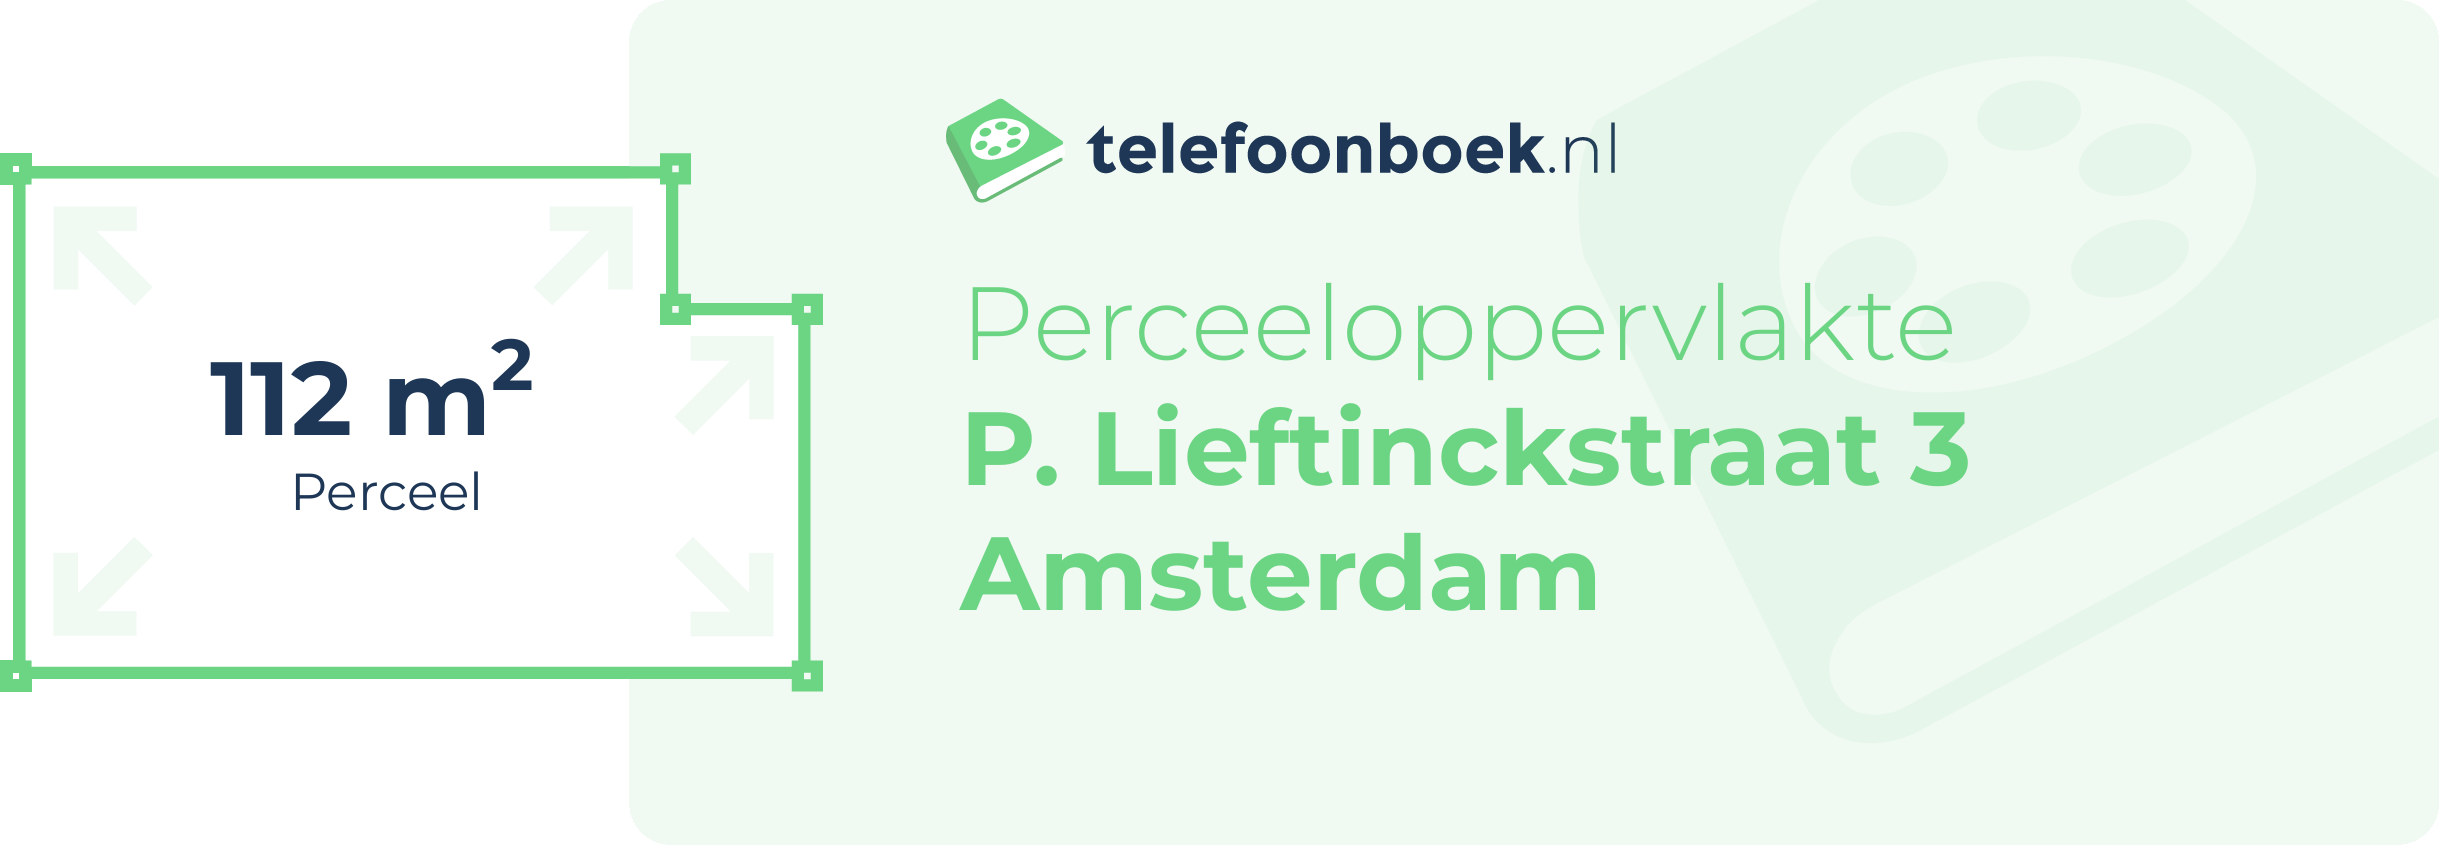 Perceeloppervlakte P. Lieftinckstraat 3 Amsterdam